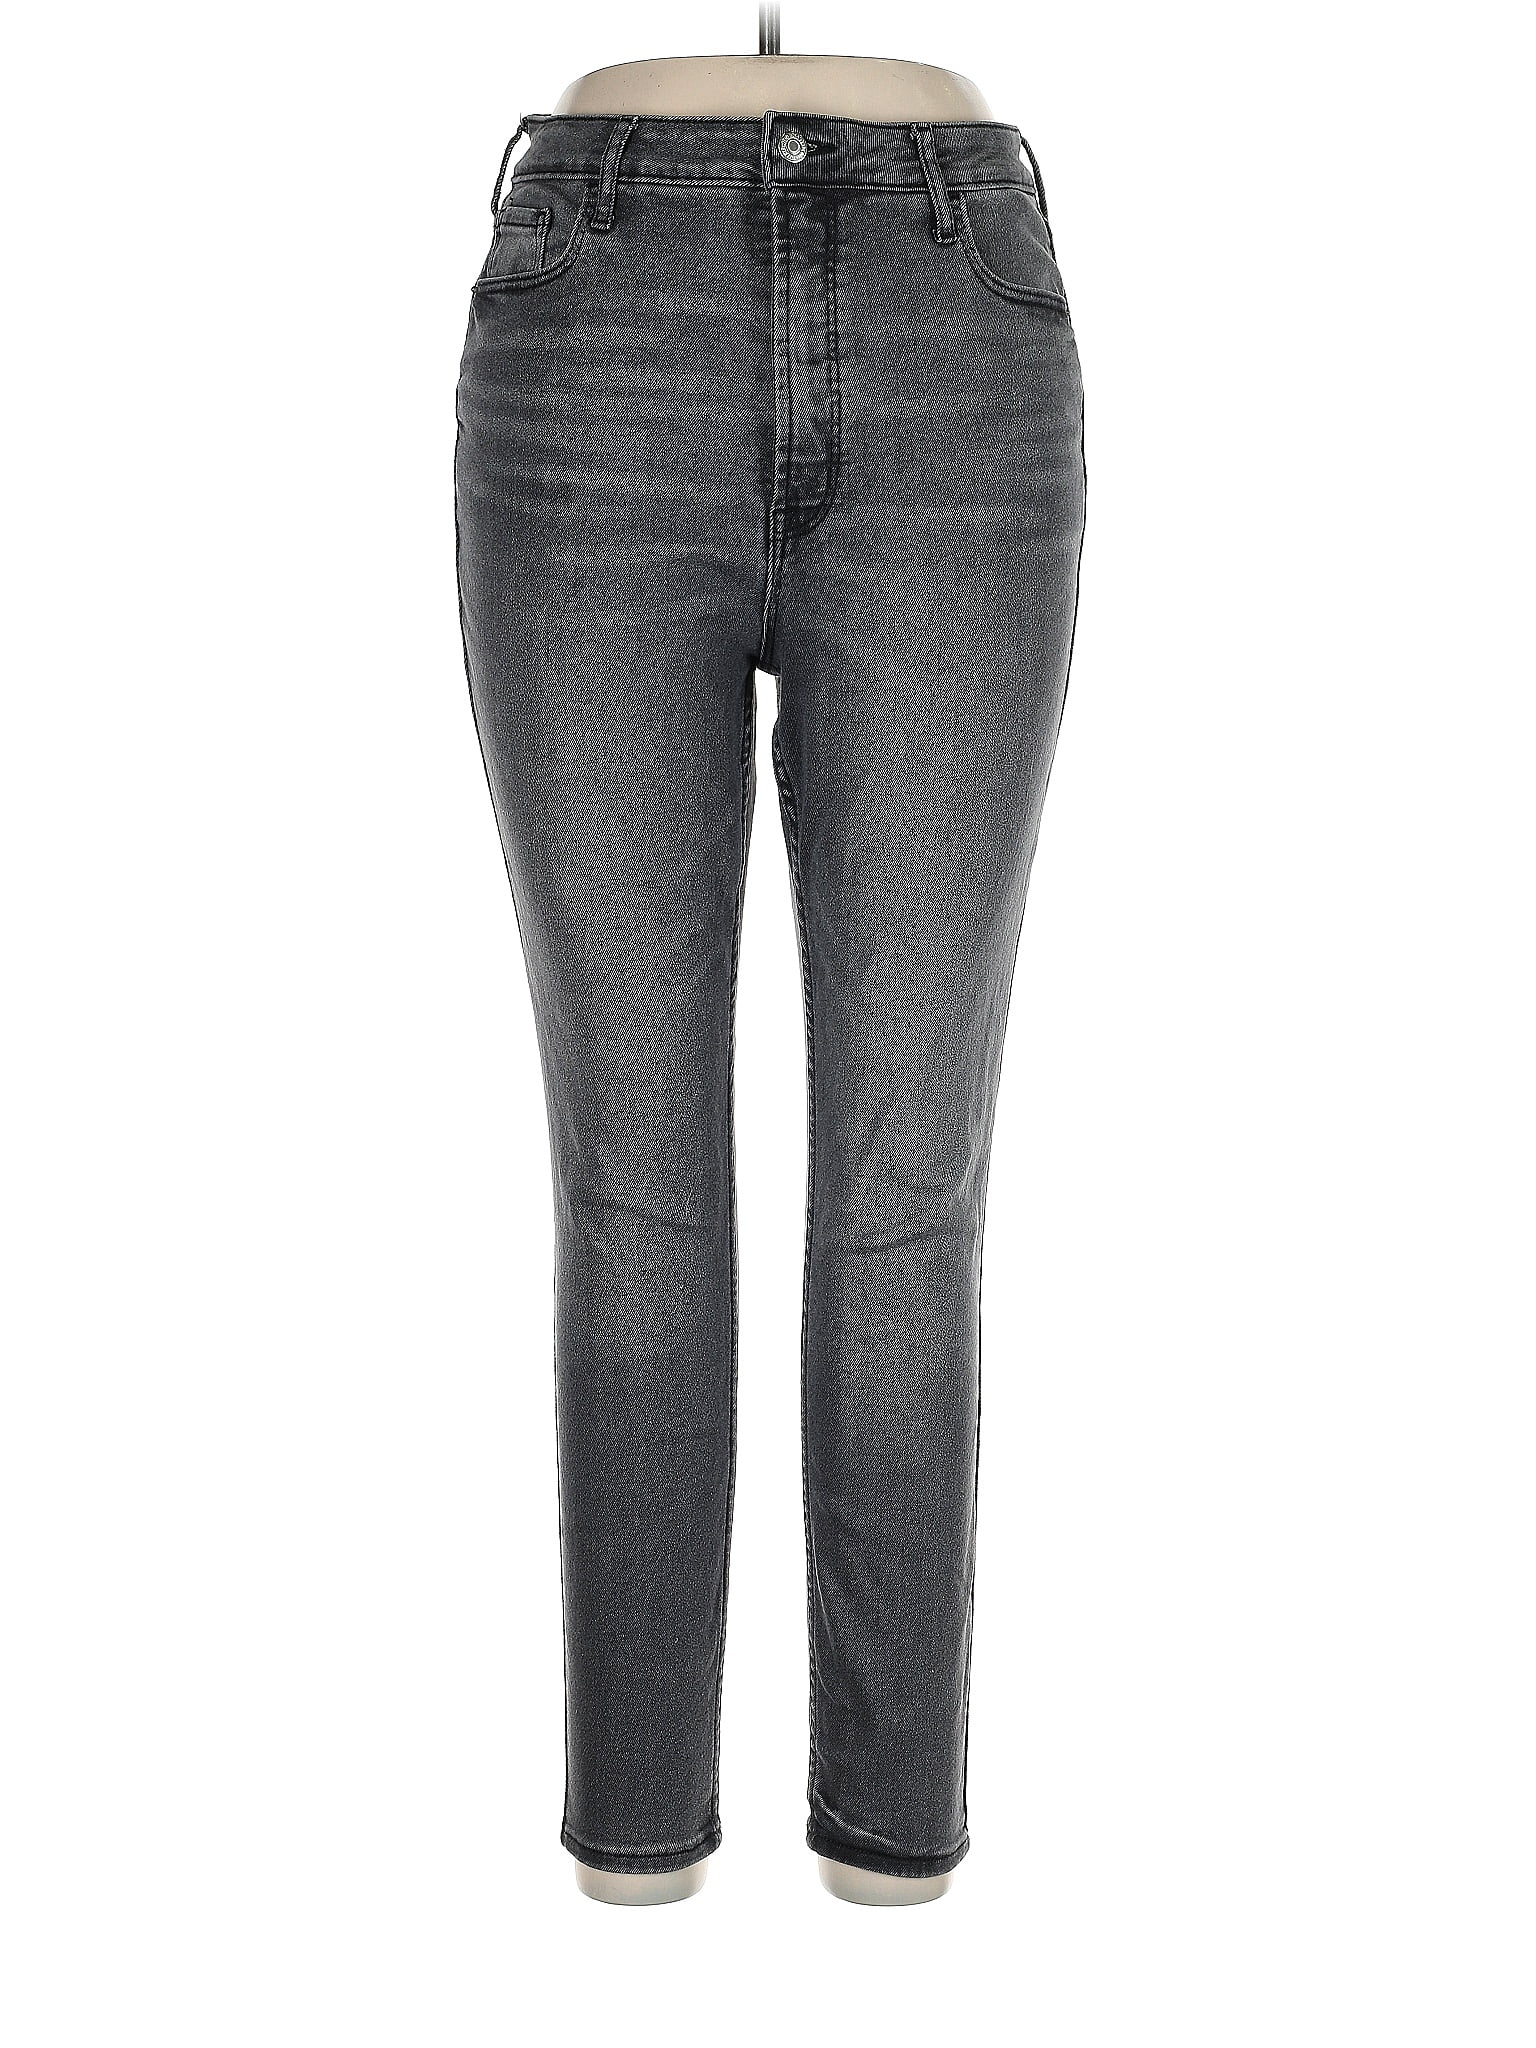 Danskin Now Gray Active Pants Size XL - 36% off